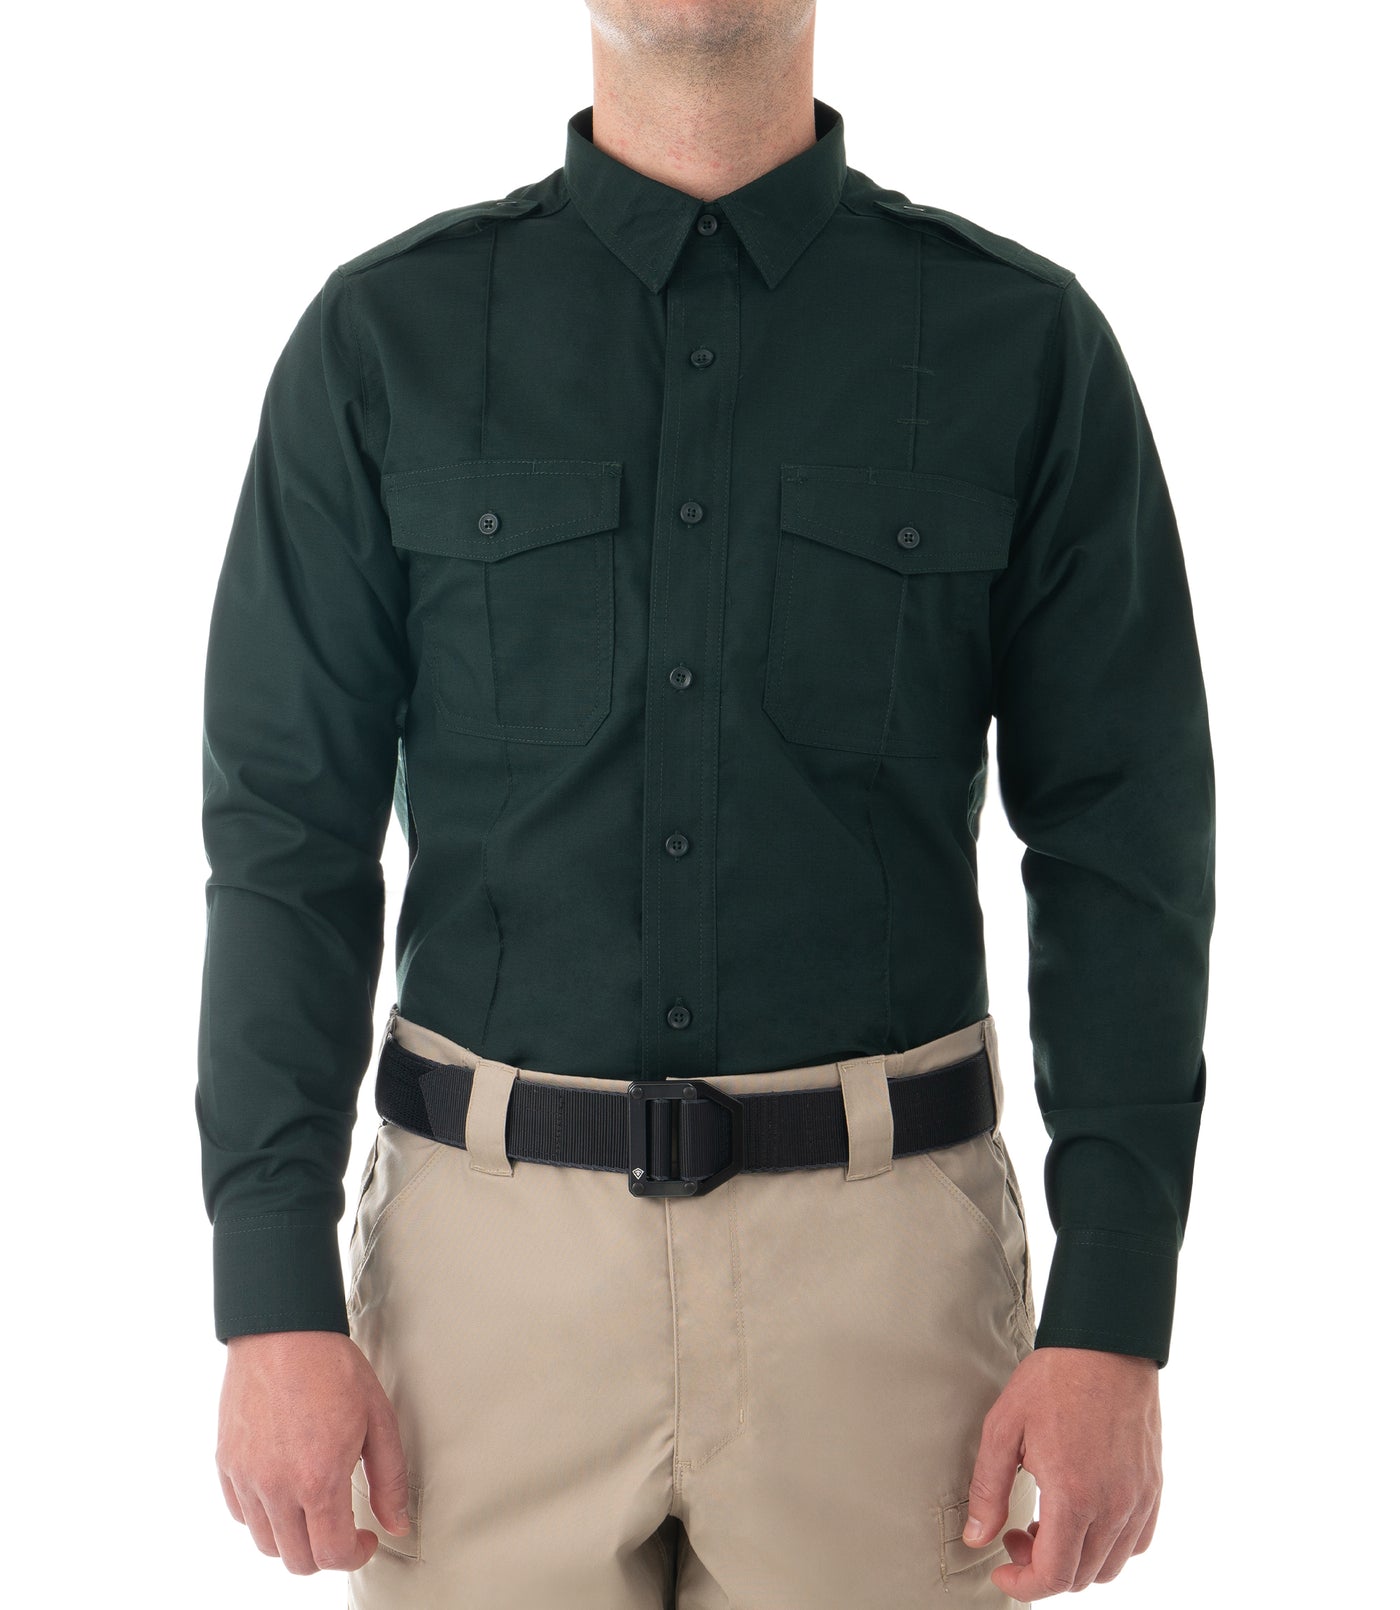 Men's Pro Duty Uniform Shirt / Spruce Green